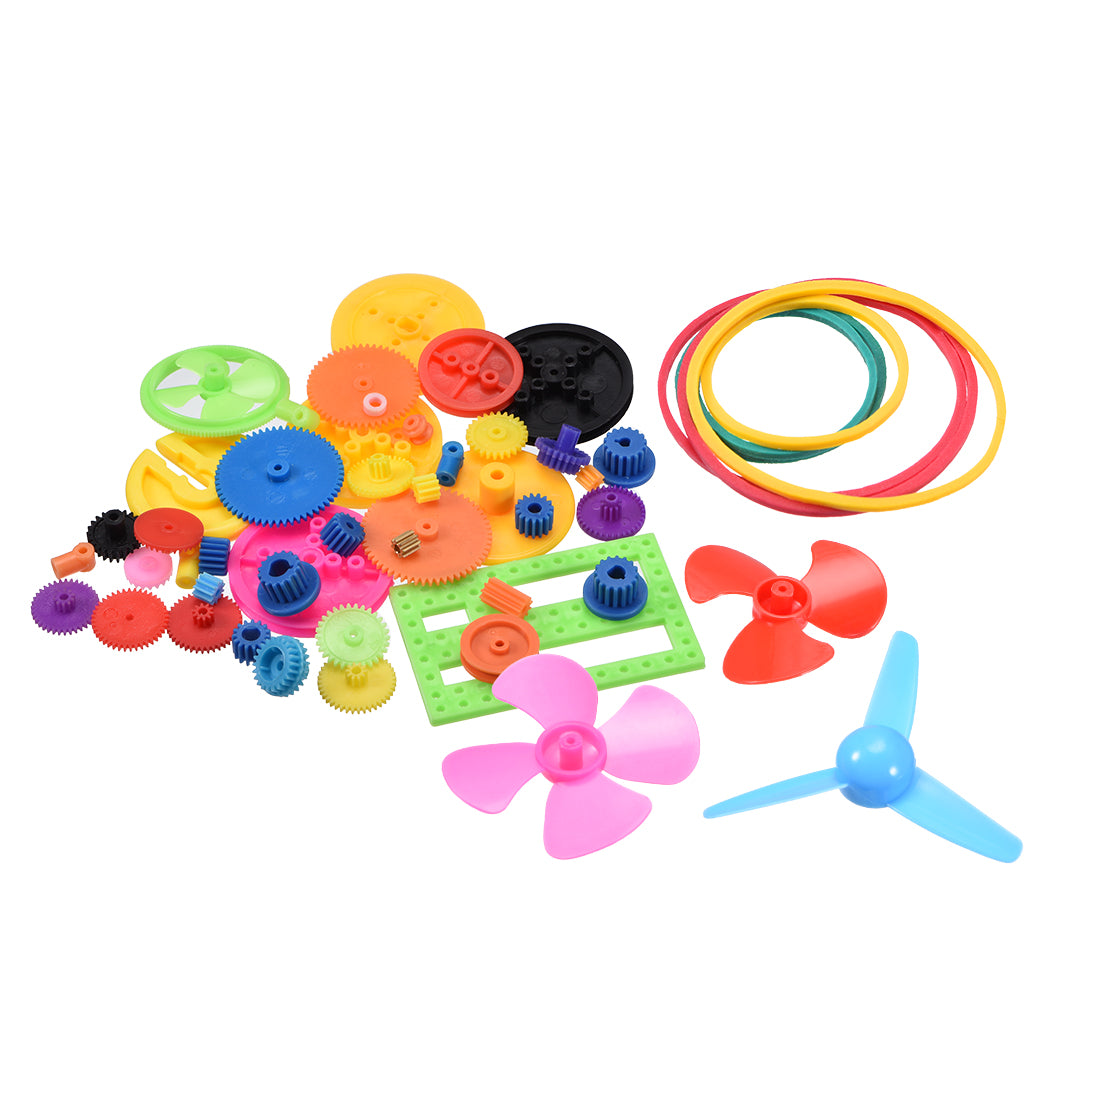 uxcell Uxcell 56 Pcs Plastic Gear Package Kit DIY Gear Assortment accessories set